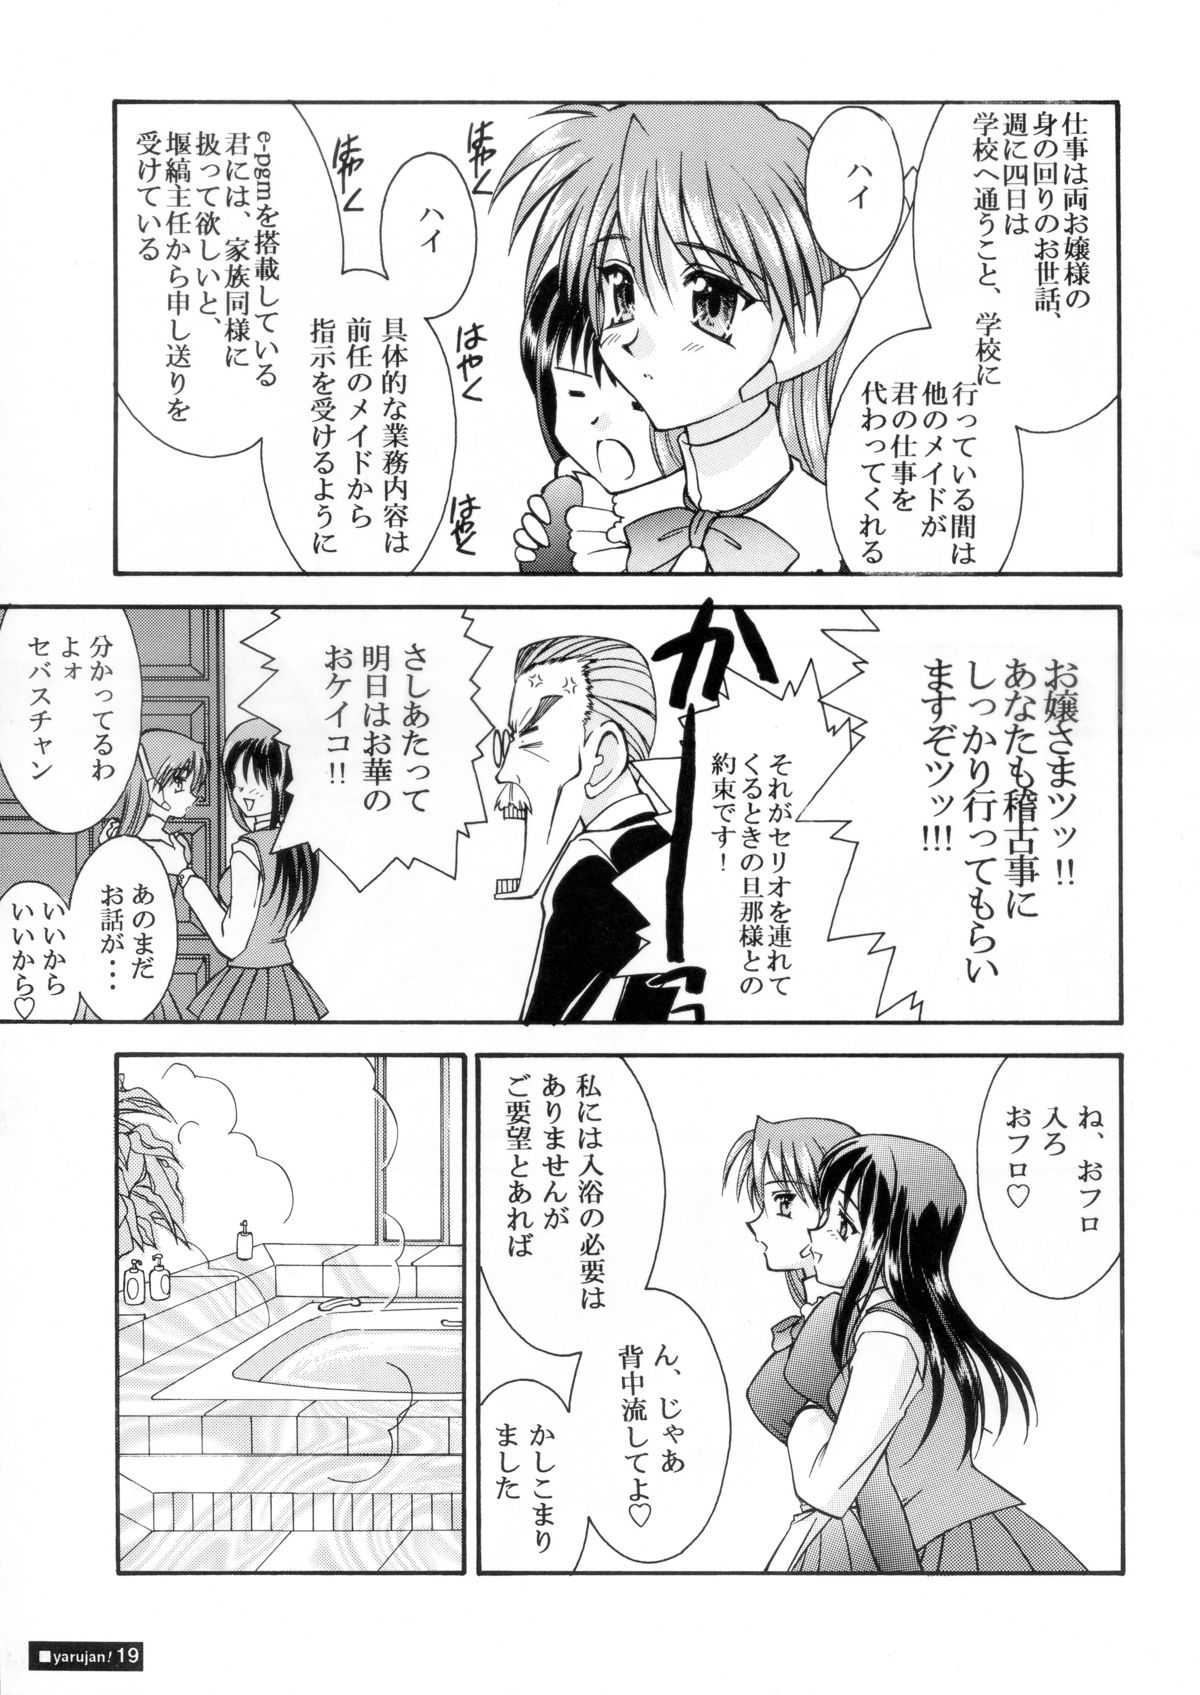 [Ananomiya Haruka]『1○才の密かな欲望』『やるじゃん女の子』2種セット [Ananomiya Haruka]『1○才の密かな欲望』『やるじゃん女の子』2種セット